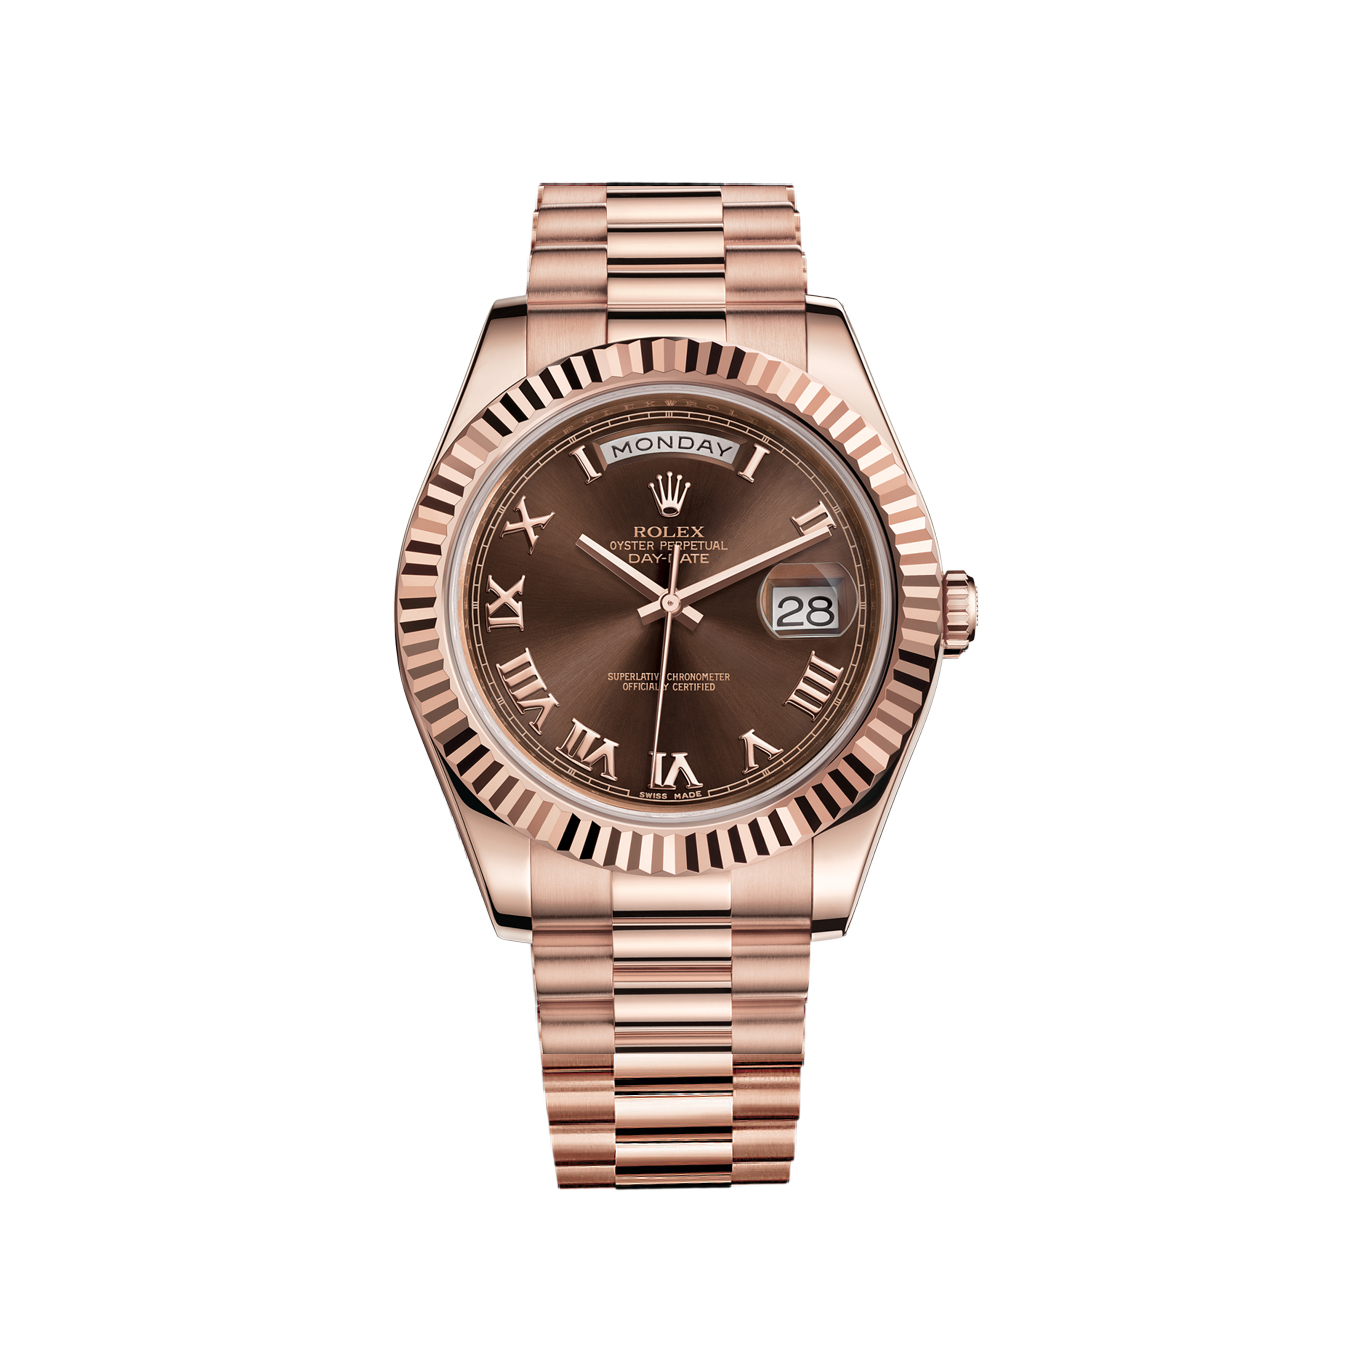 Day-Date II 218235 Rose Gold Watch (Chocolate)